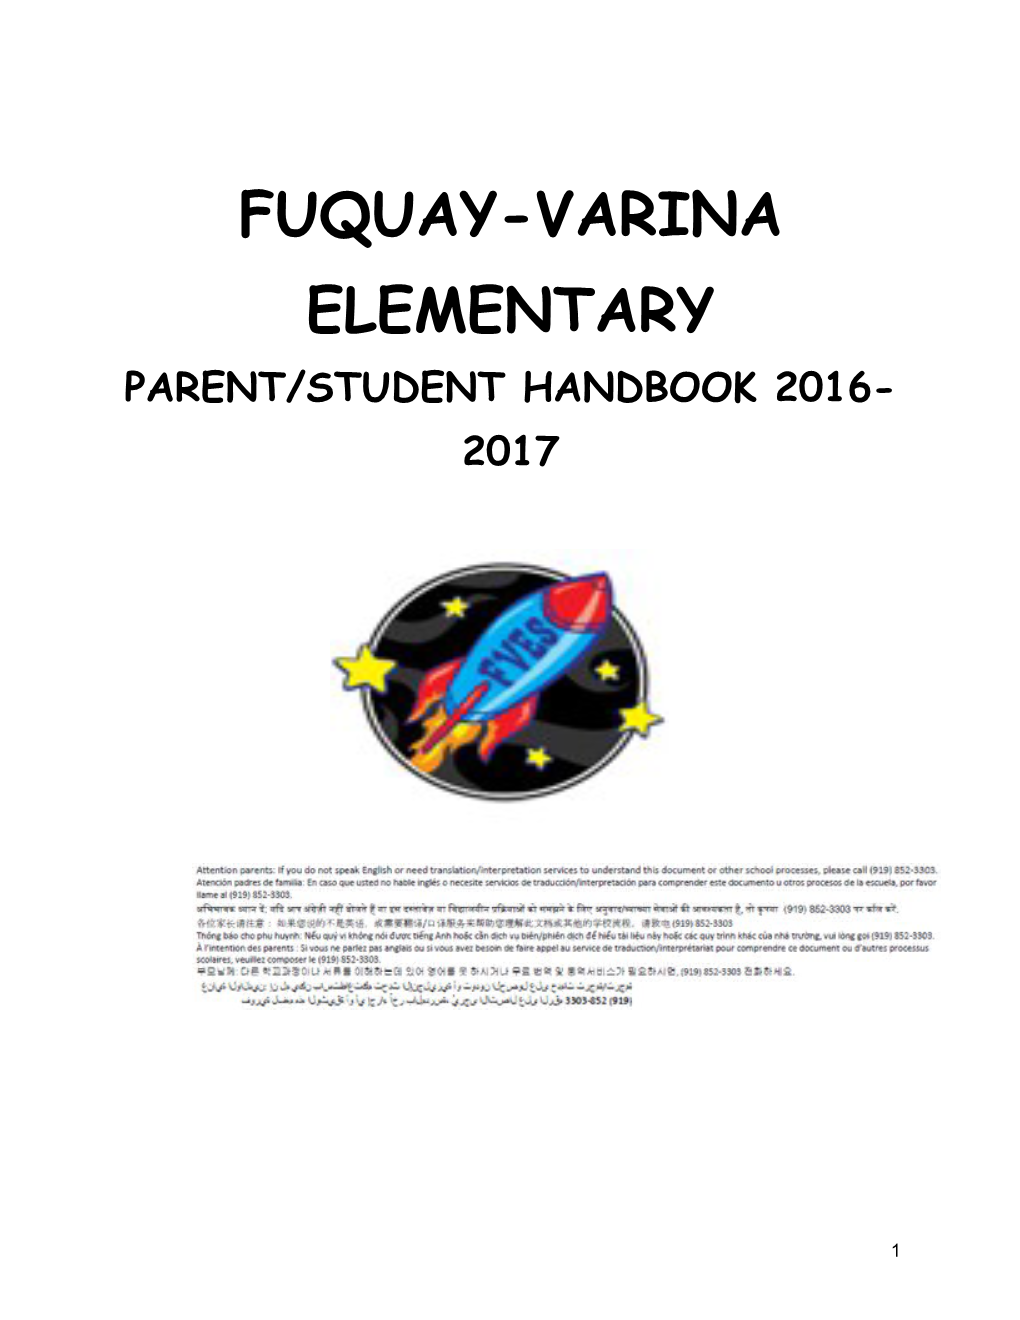 Fuquay-Varina Elementary Parent/Student Handbook 2016-2017